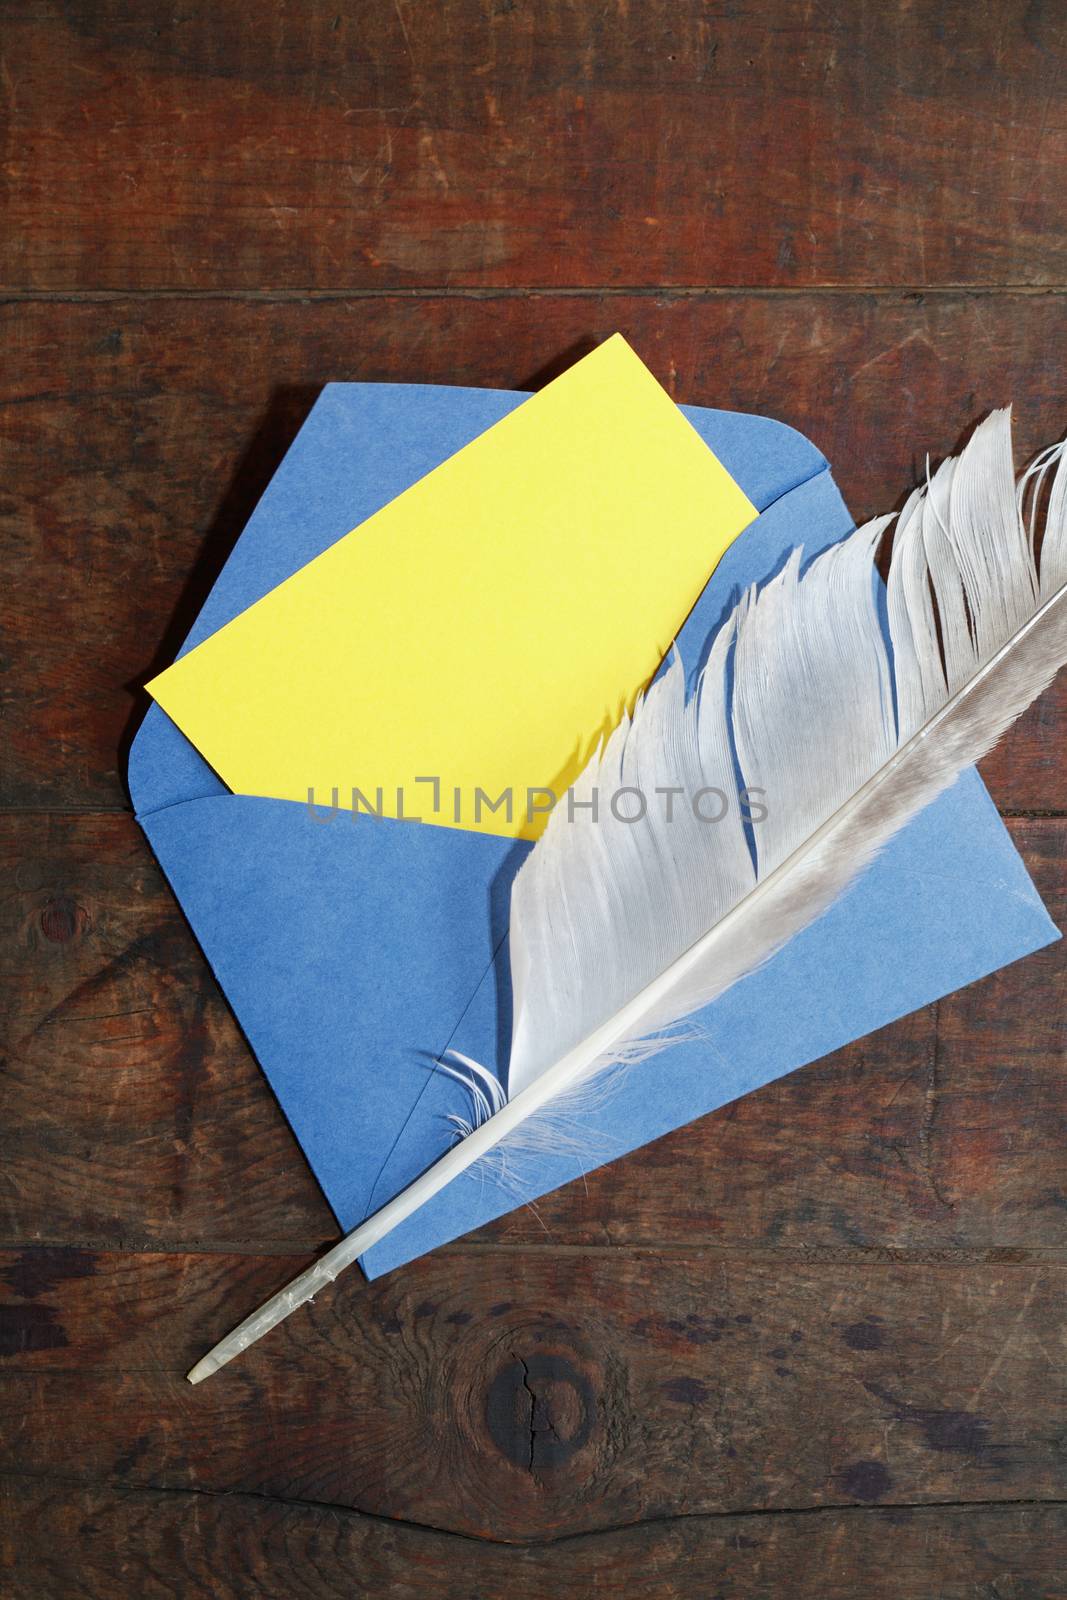 Blank yellow paper inside open envelope on wooden background